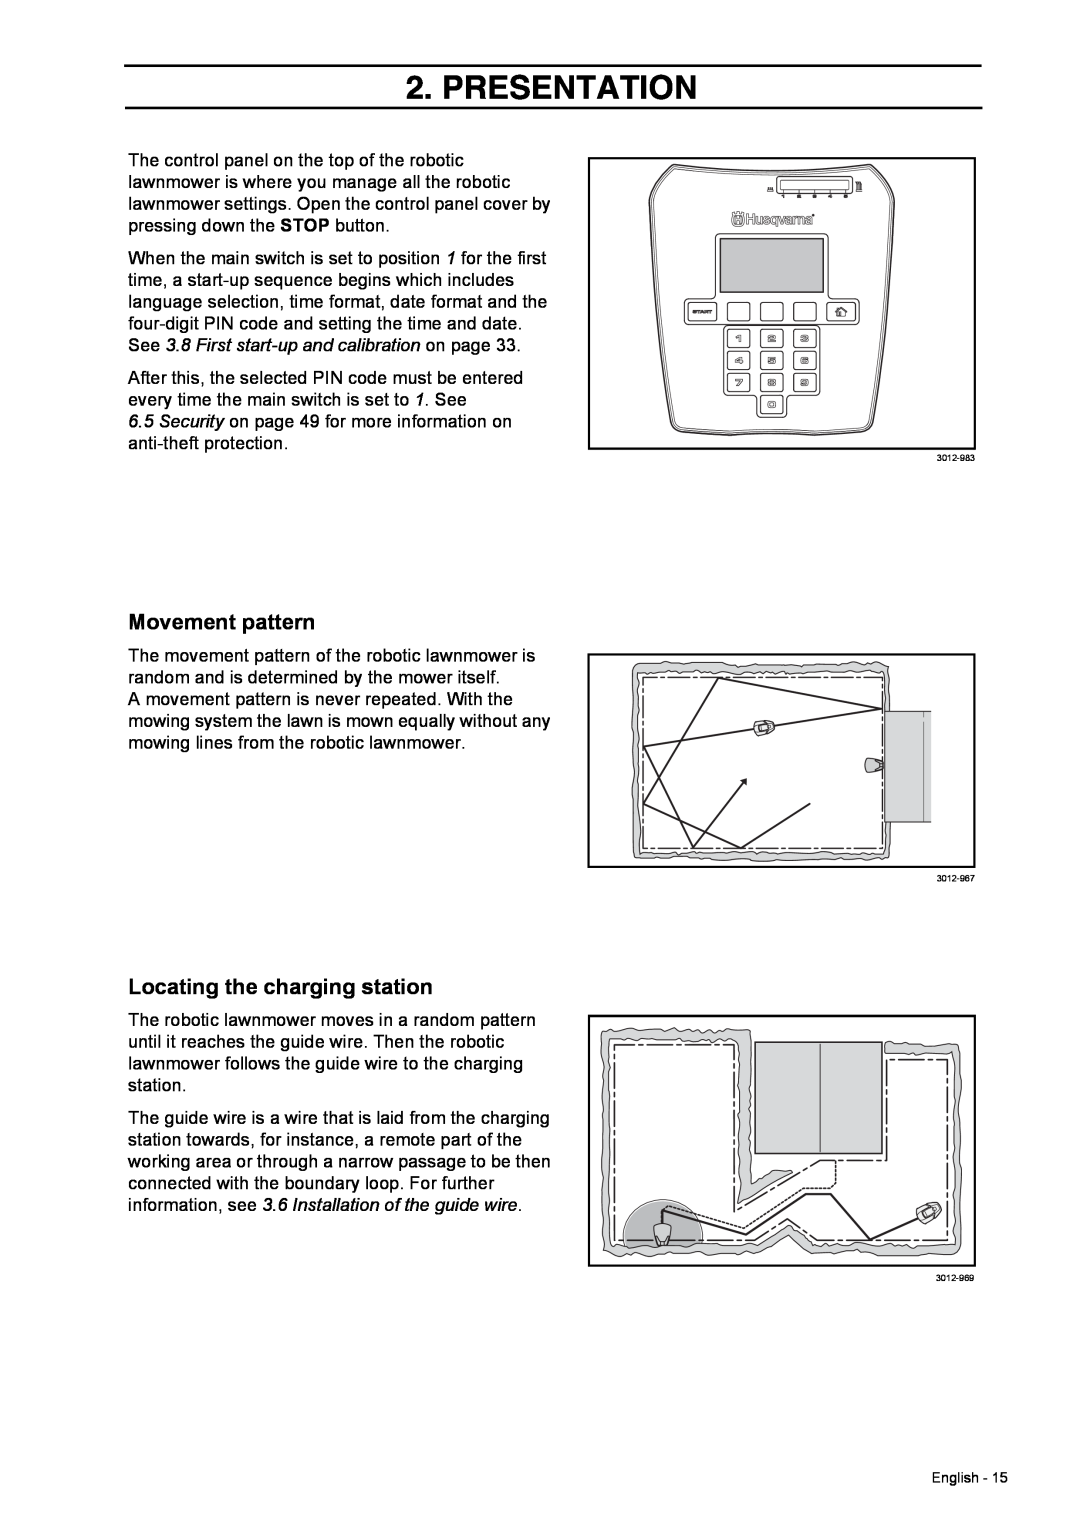 Husqvarna 308 manual Movement pattern, Locating the charging station, Presentation 